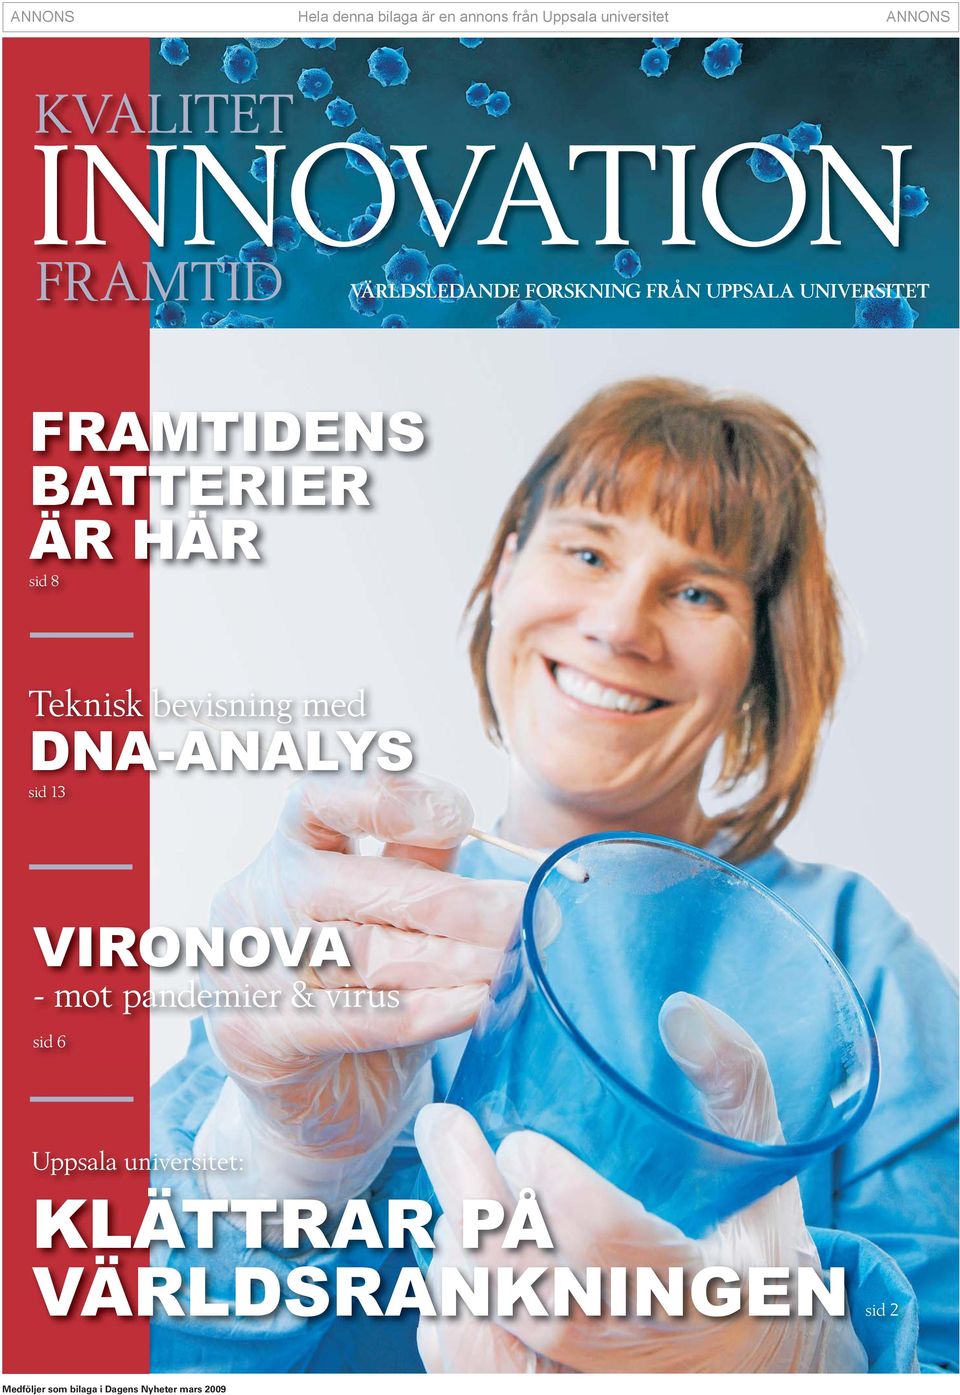 DNA-ANALYS sid 13 VIRONOVA - mot pandemier & virus sid 6 Uppsala